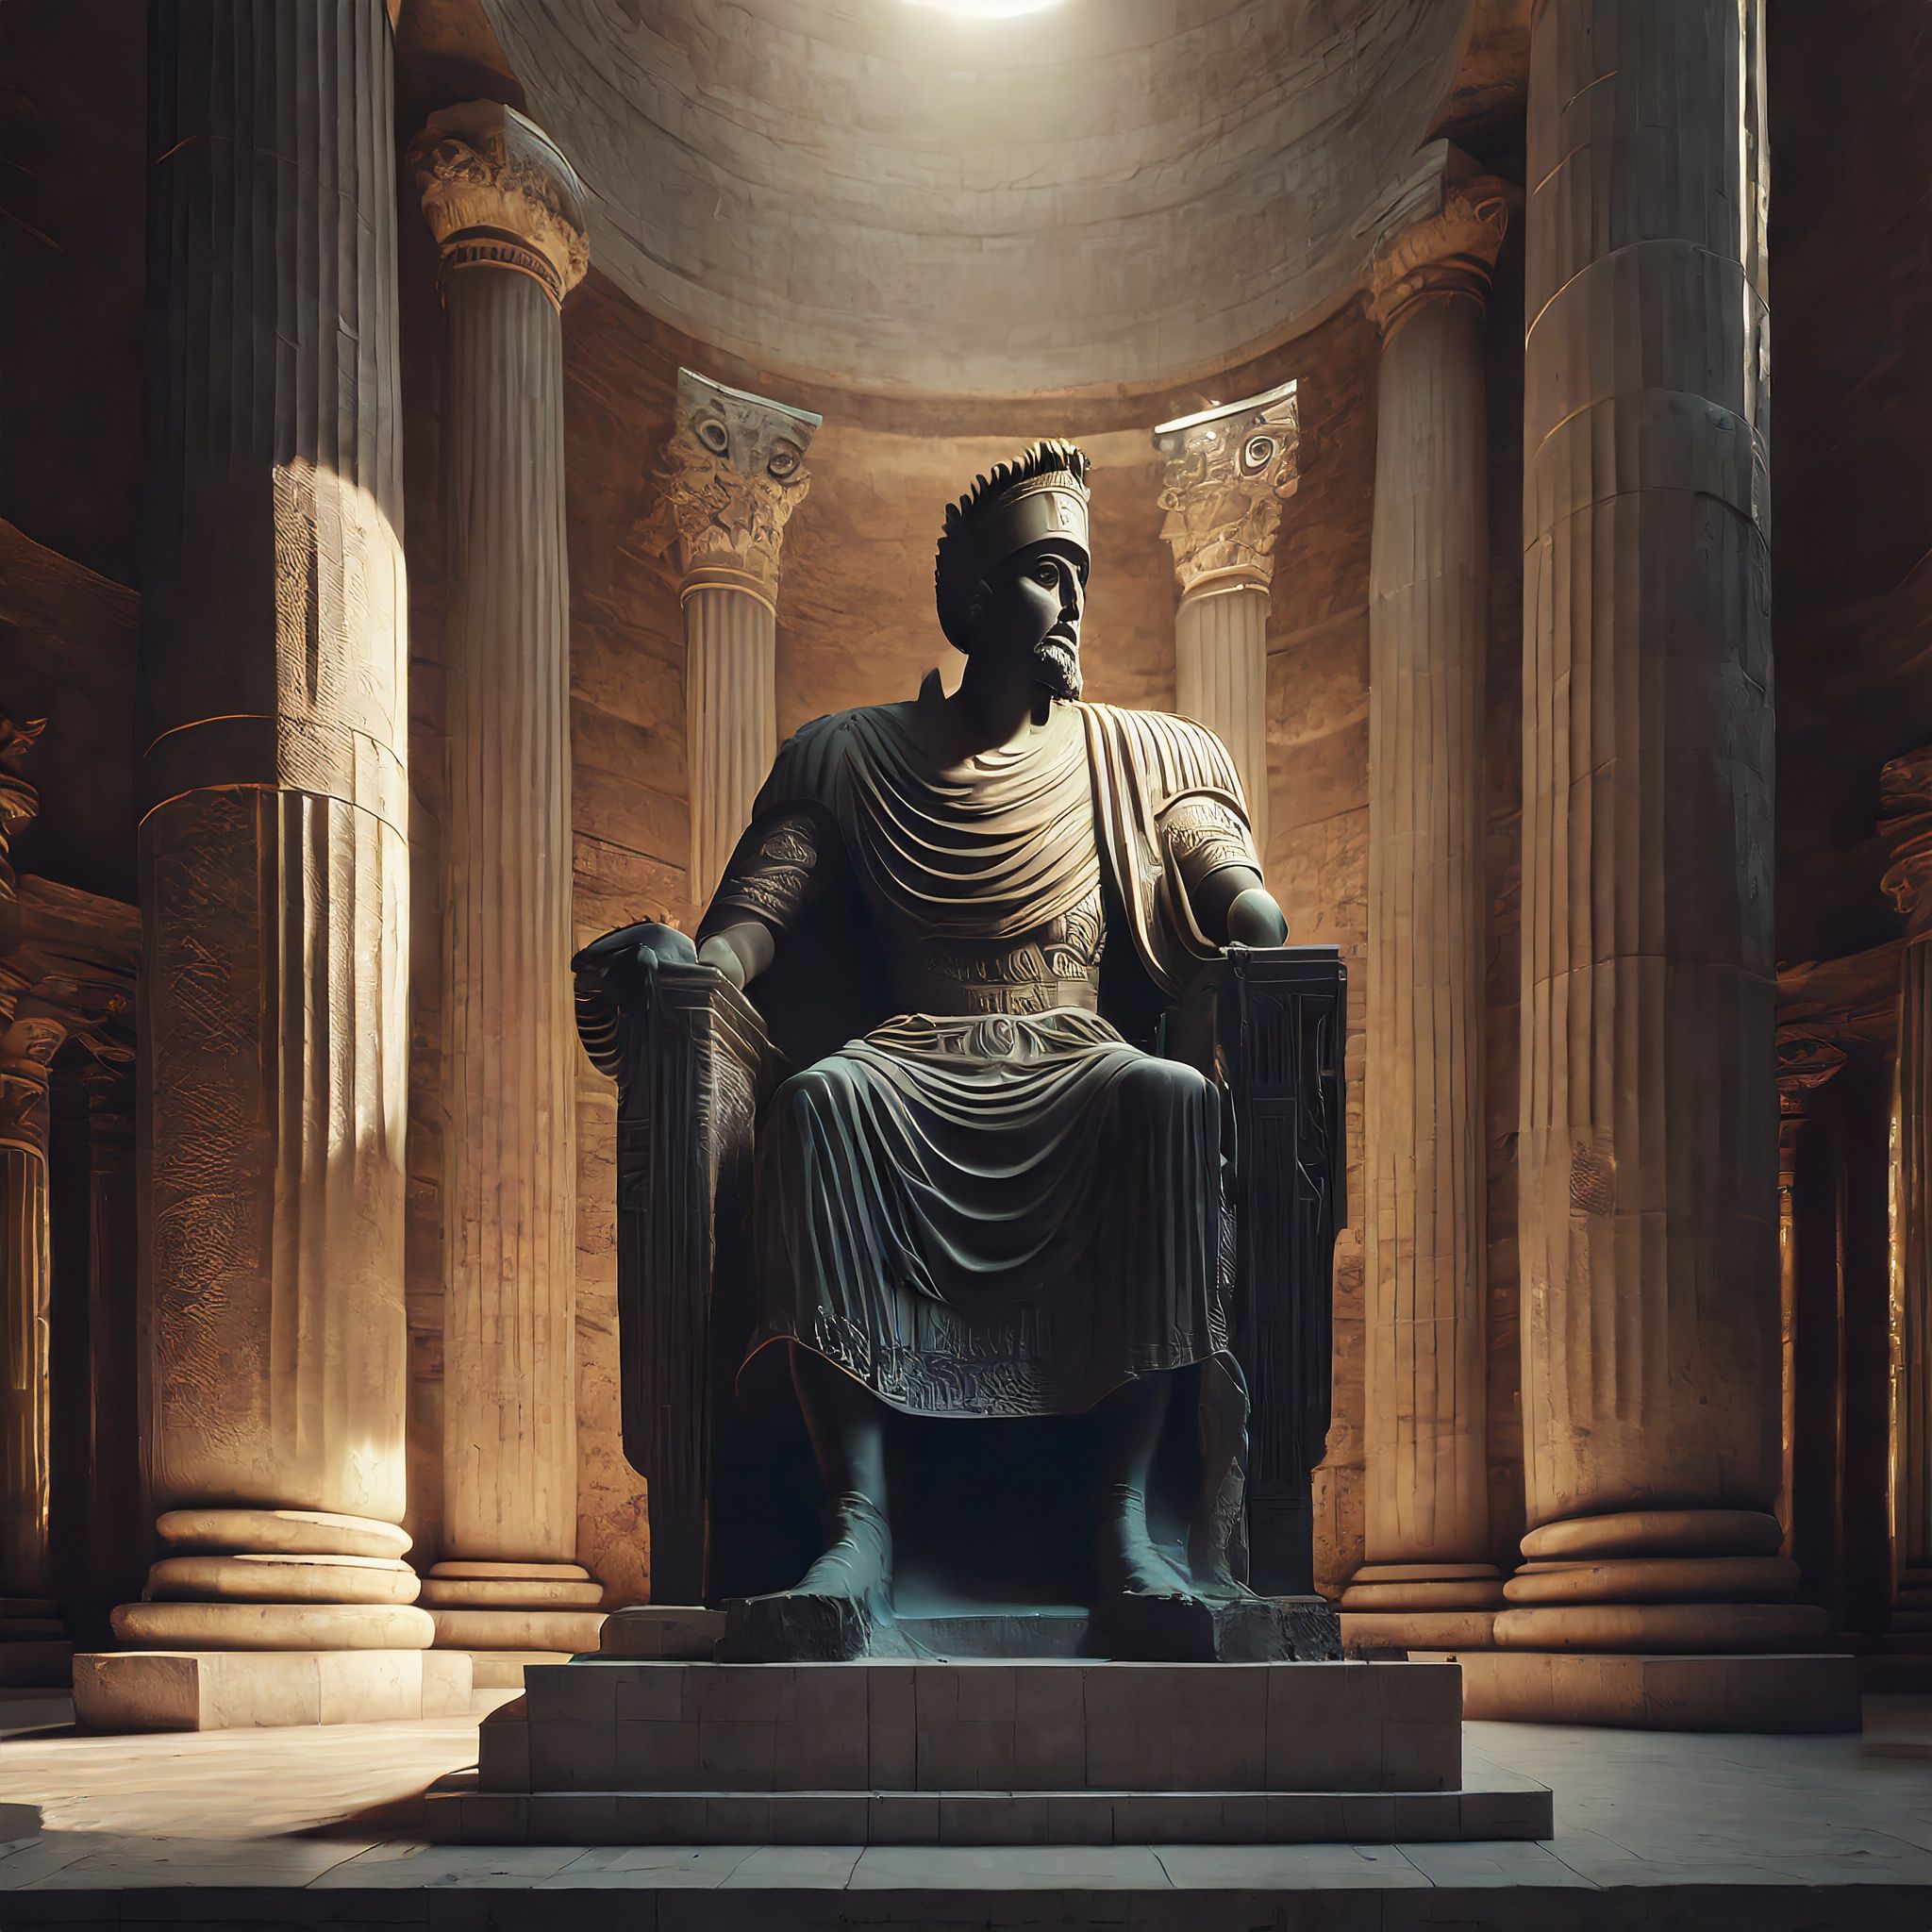 A statue of Roman Emperor Caligula located in the Temple of Jerusalem.